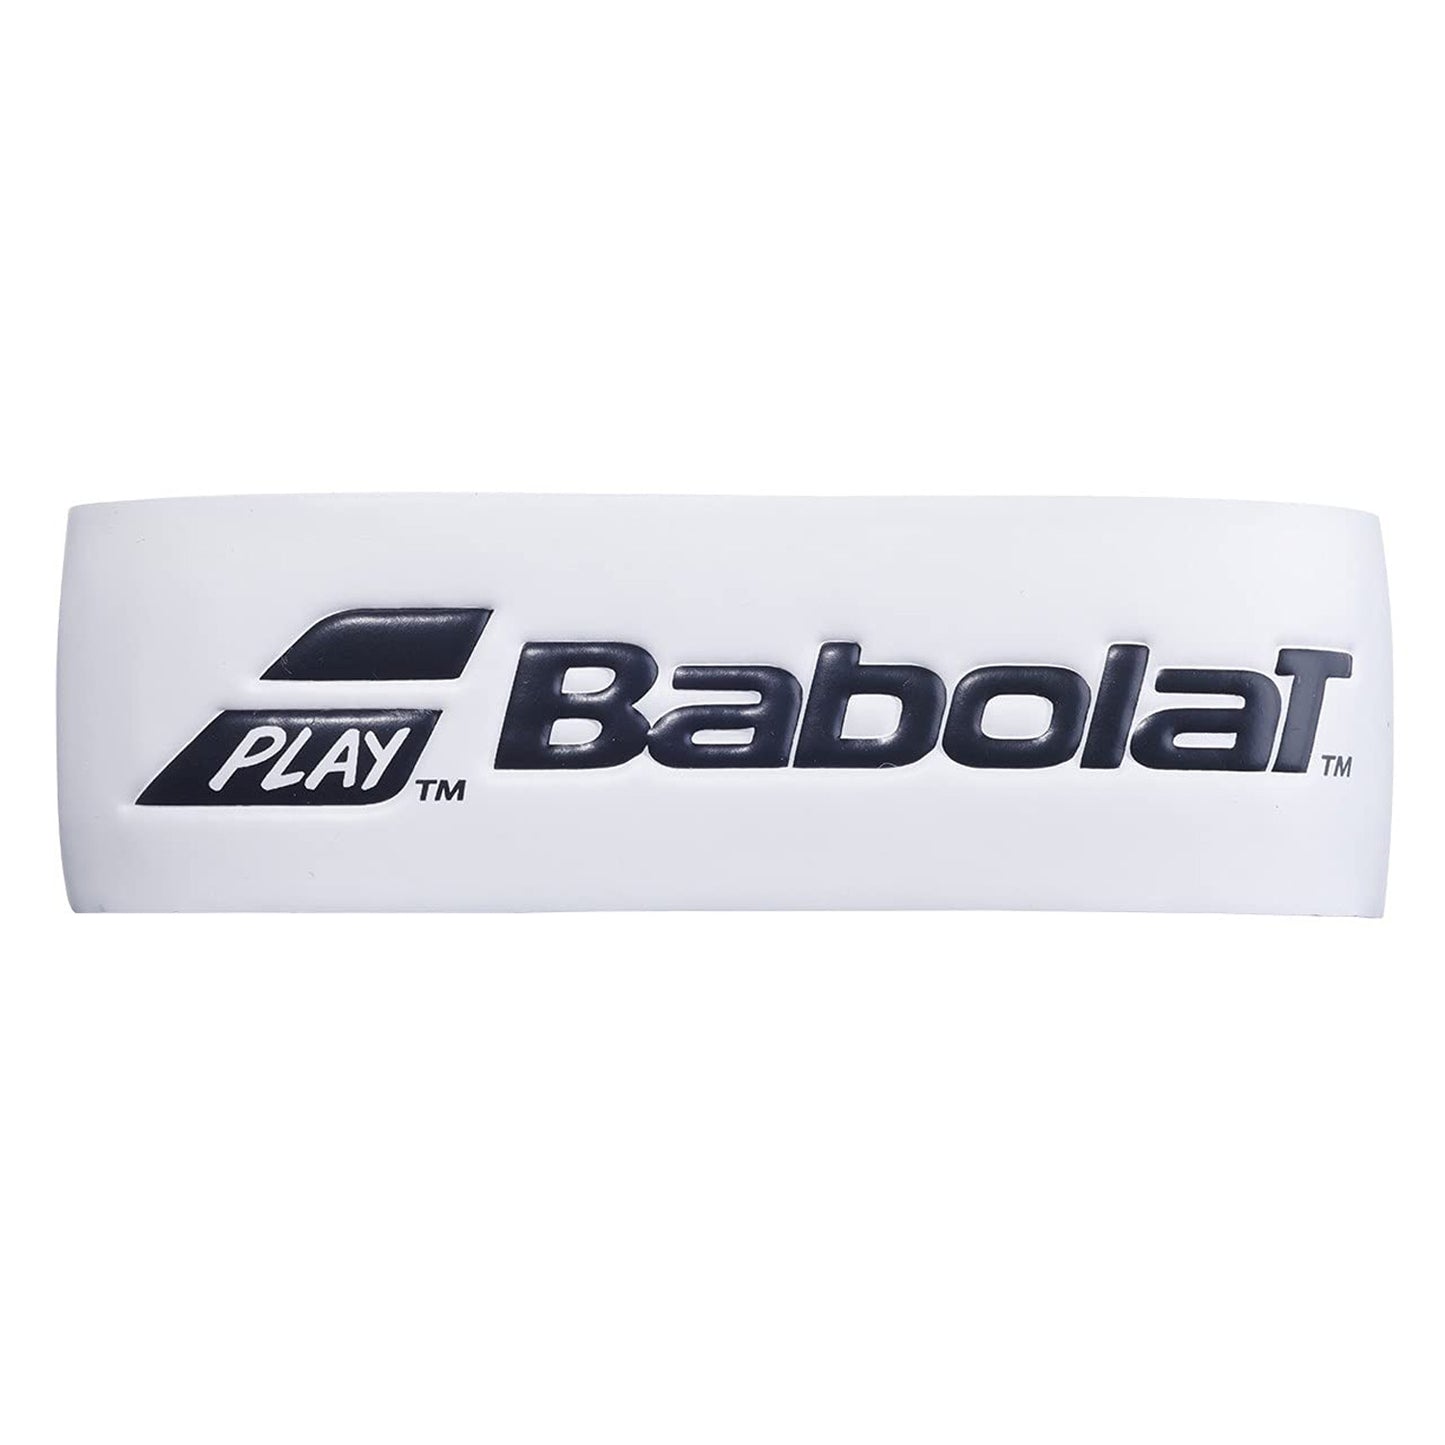 Babolat Syntec Pro X1 Pure Feel Grip, White - Best Price online Prokicksports.com